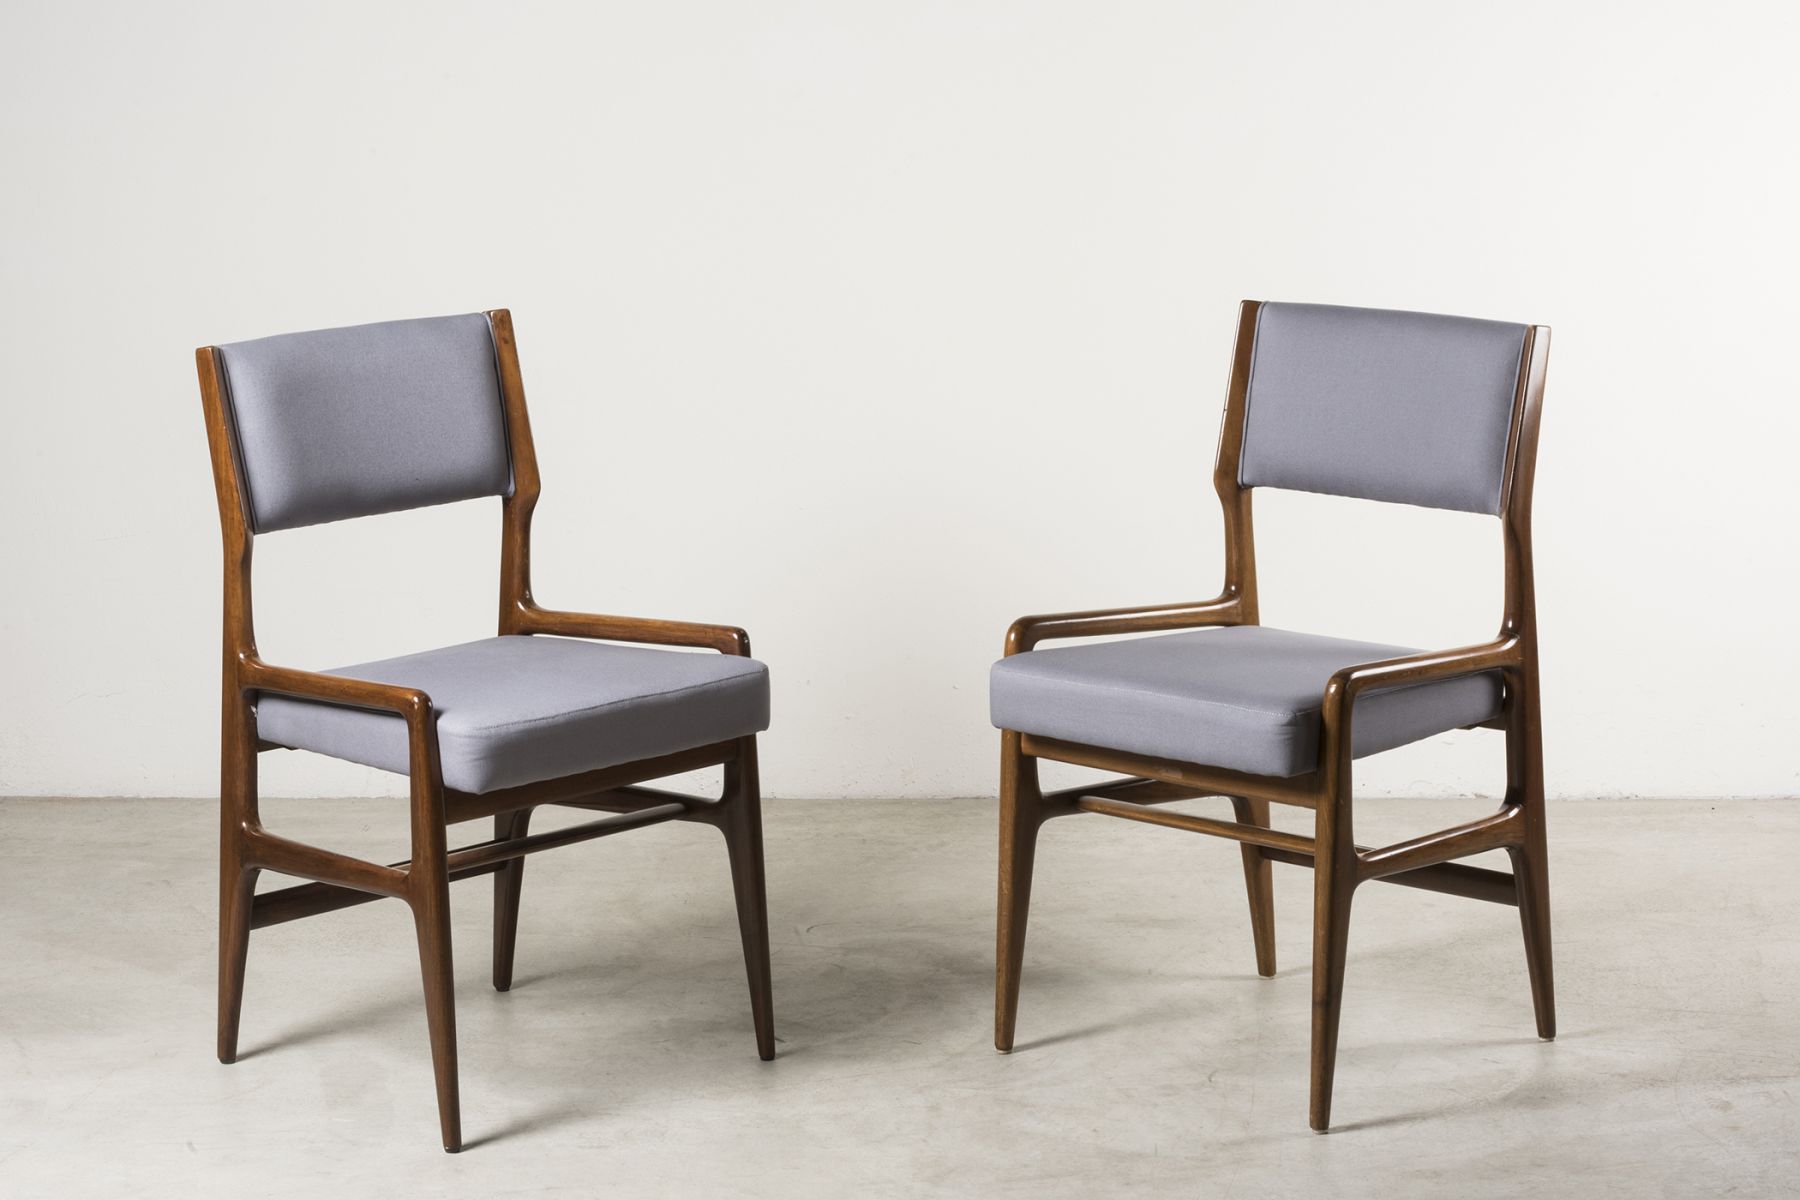  Pair of chairs mod. AP 1676 Gio Ponti pic-1